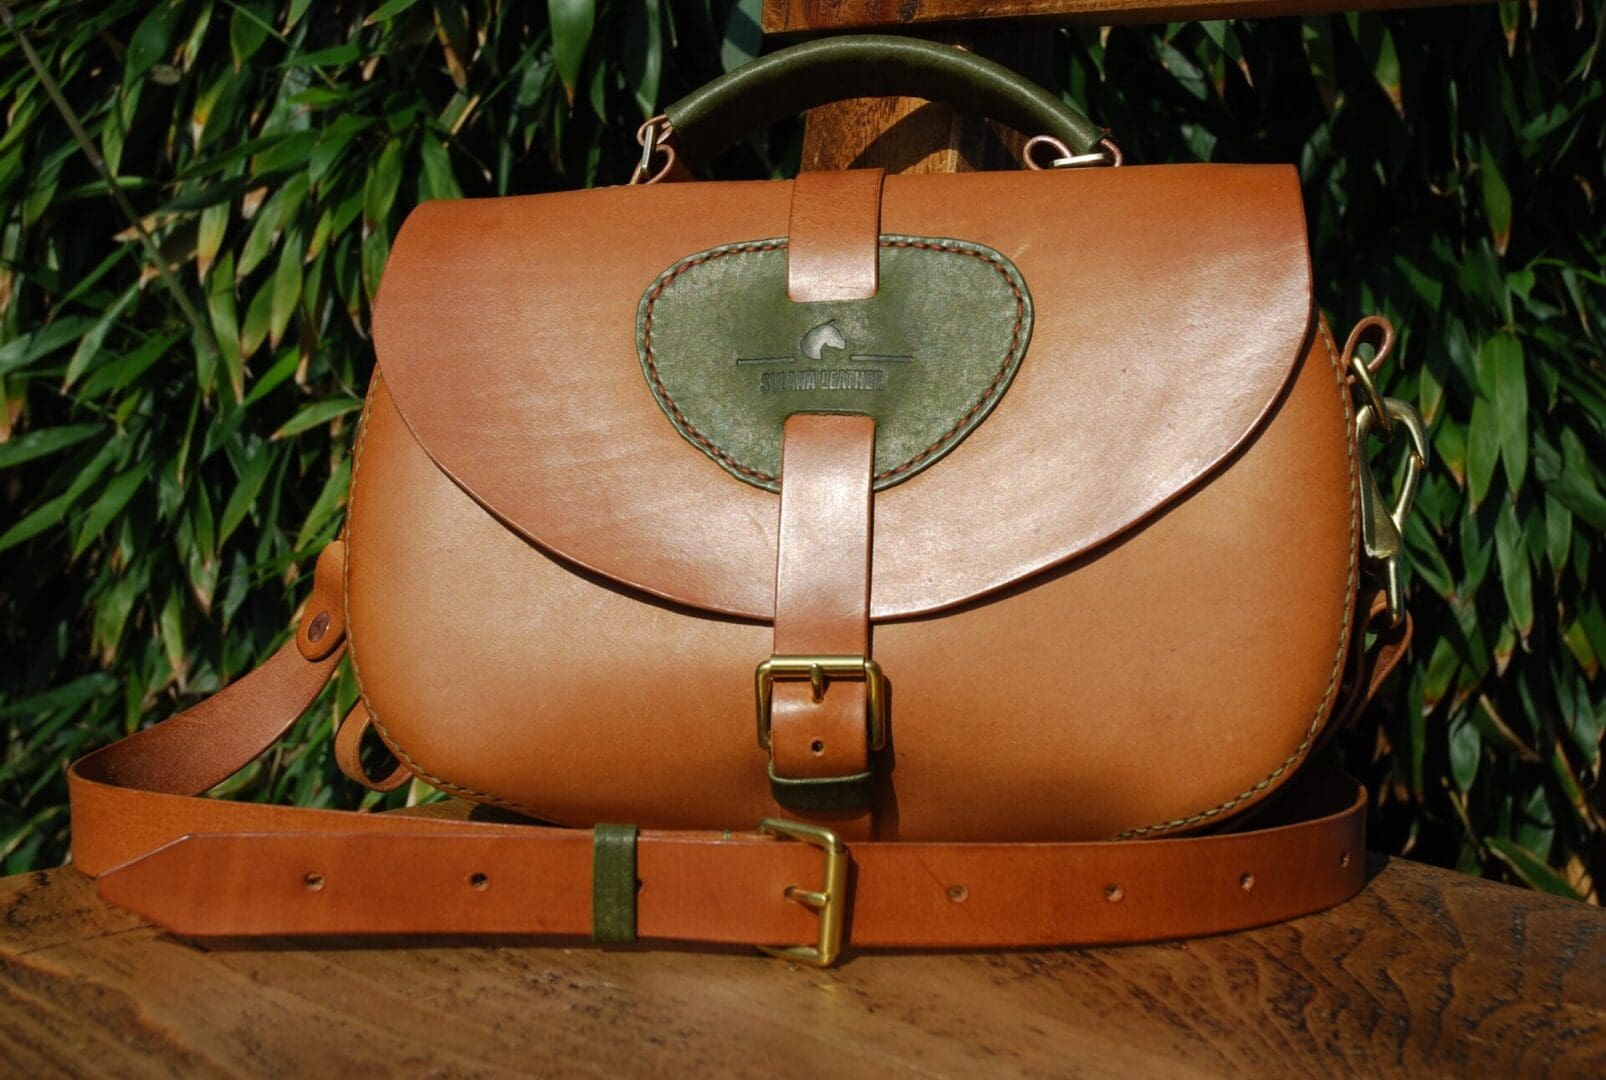 Handmade Italian leather handbag with adjustable strap and buckle fastening